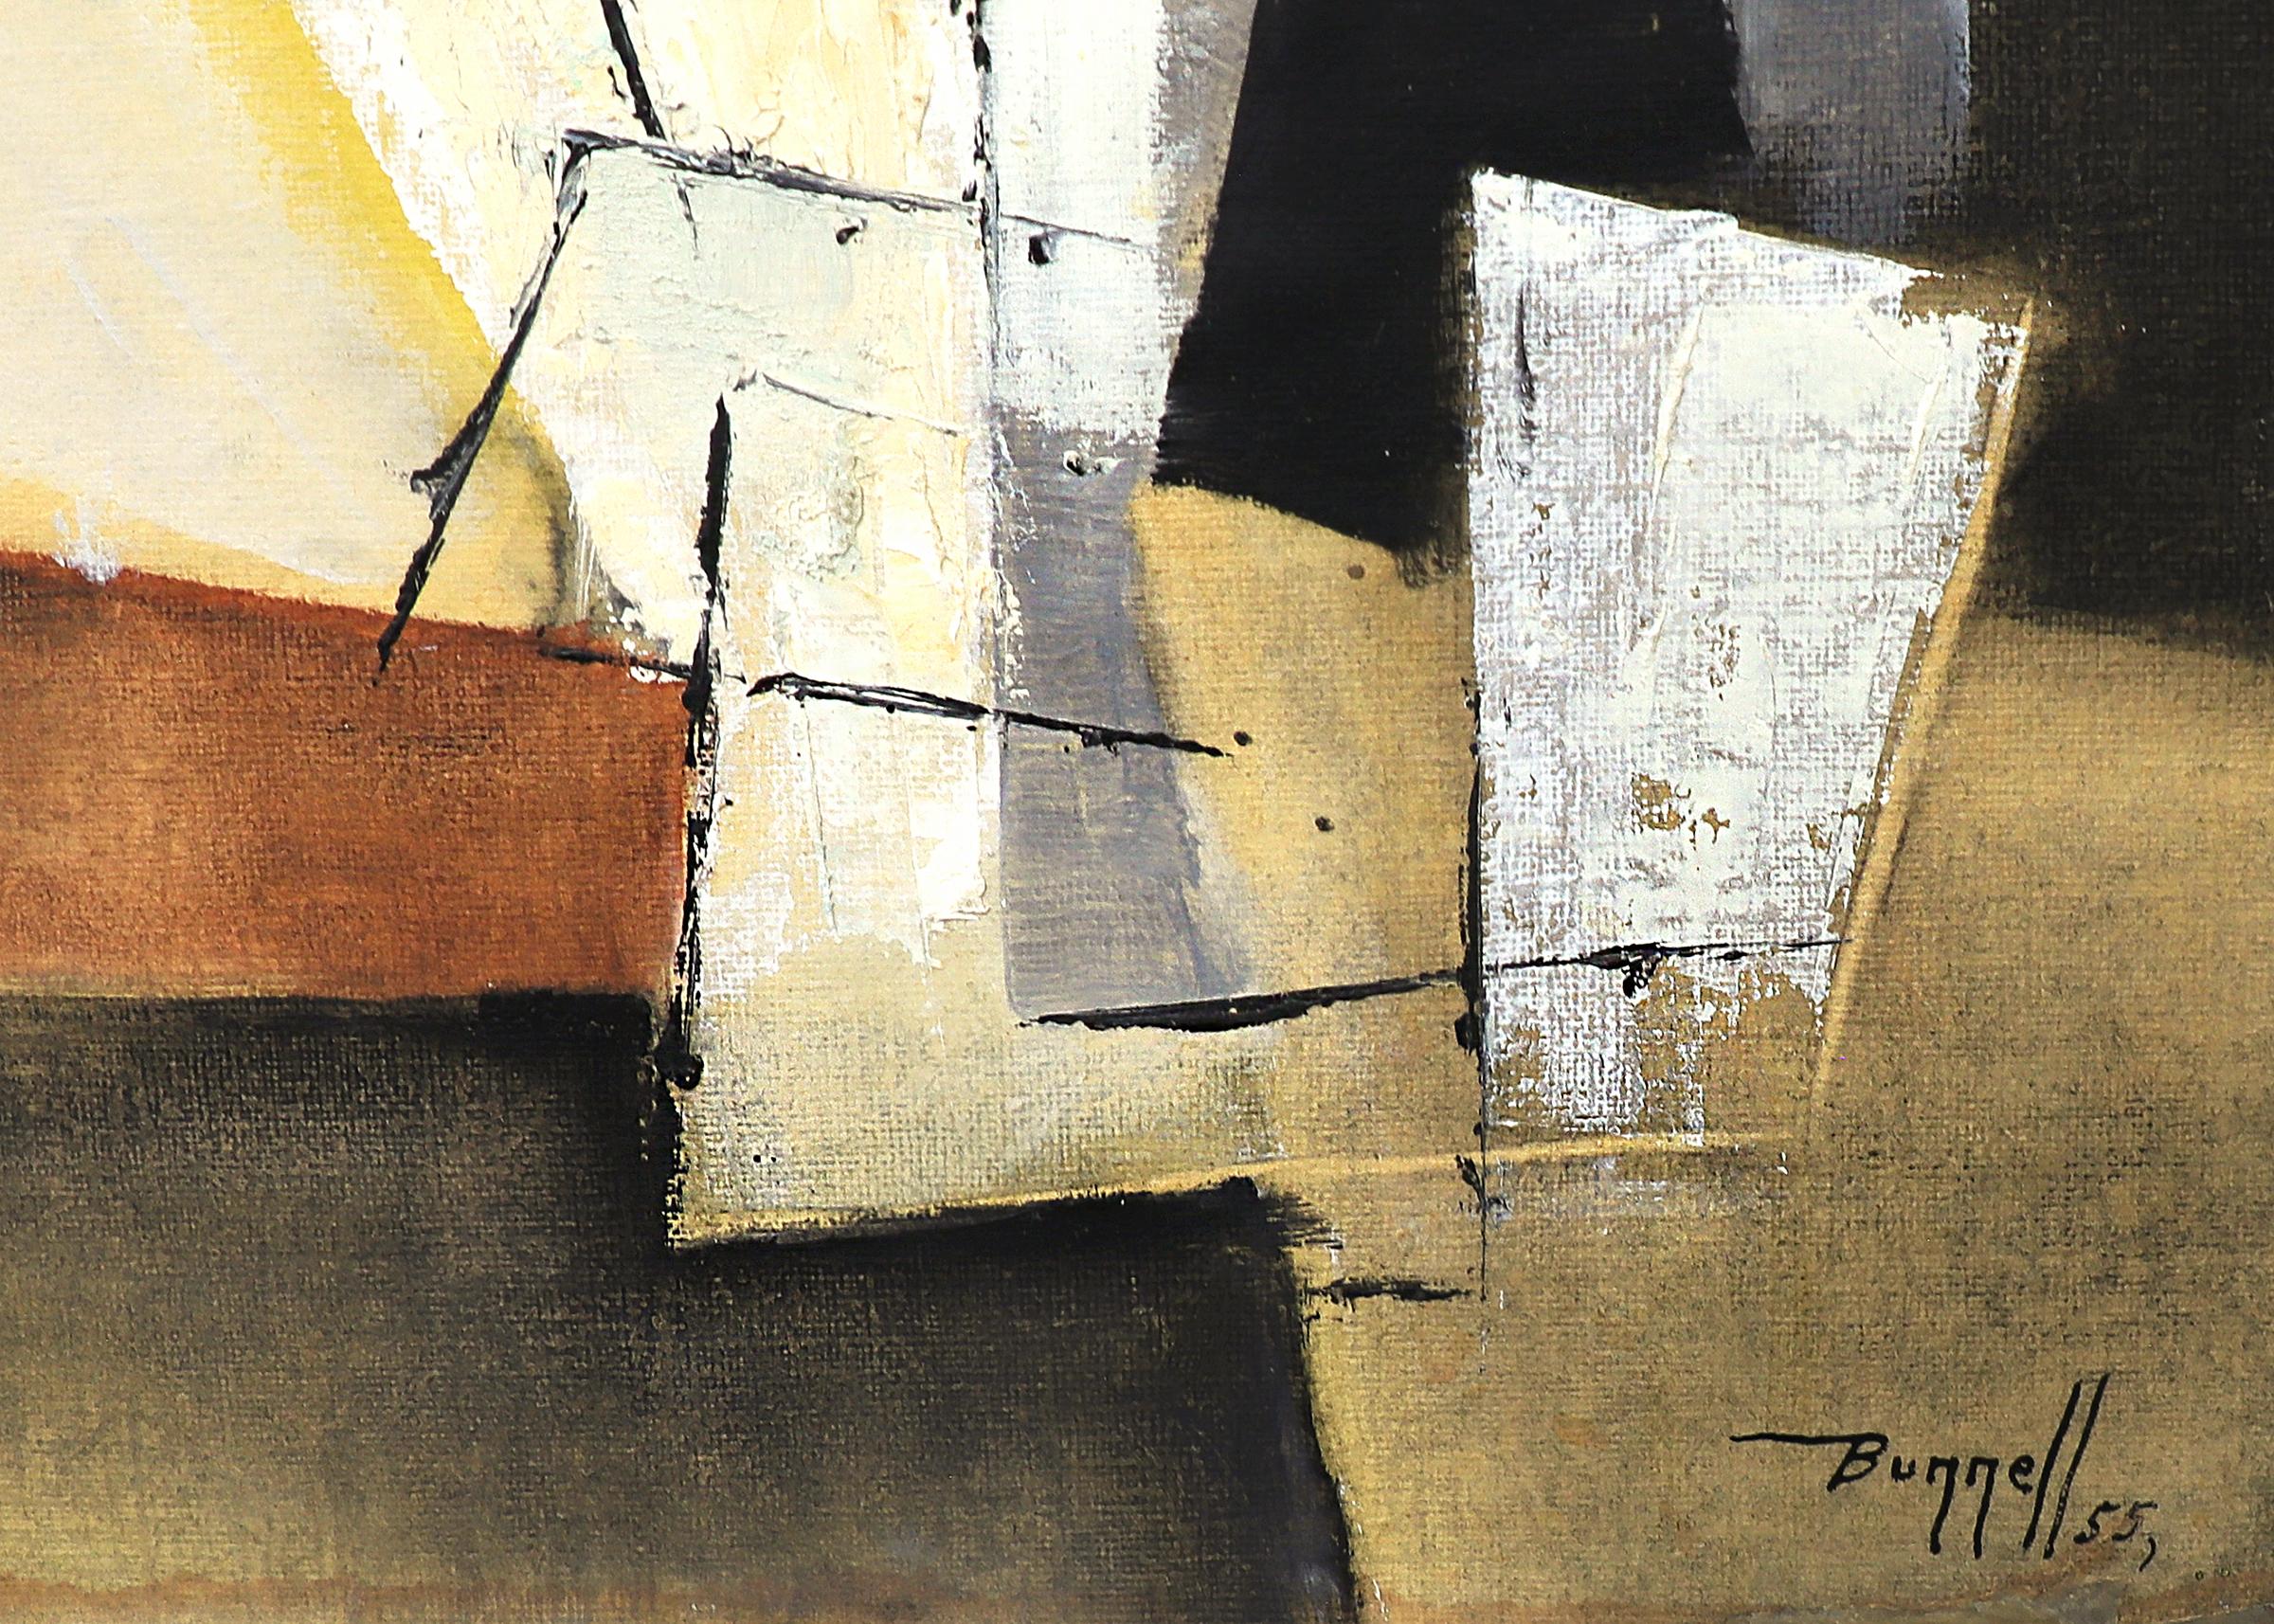 1950s abstract art